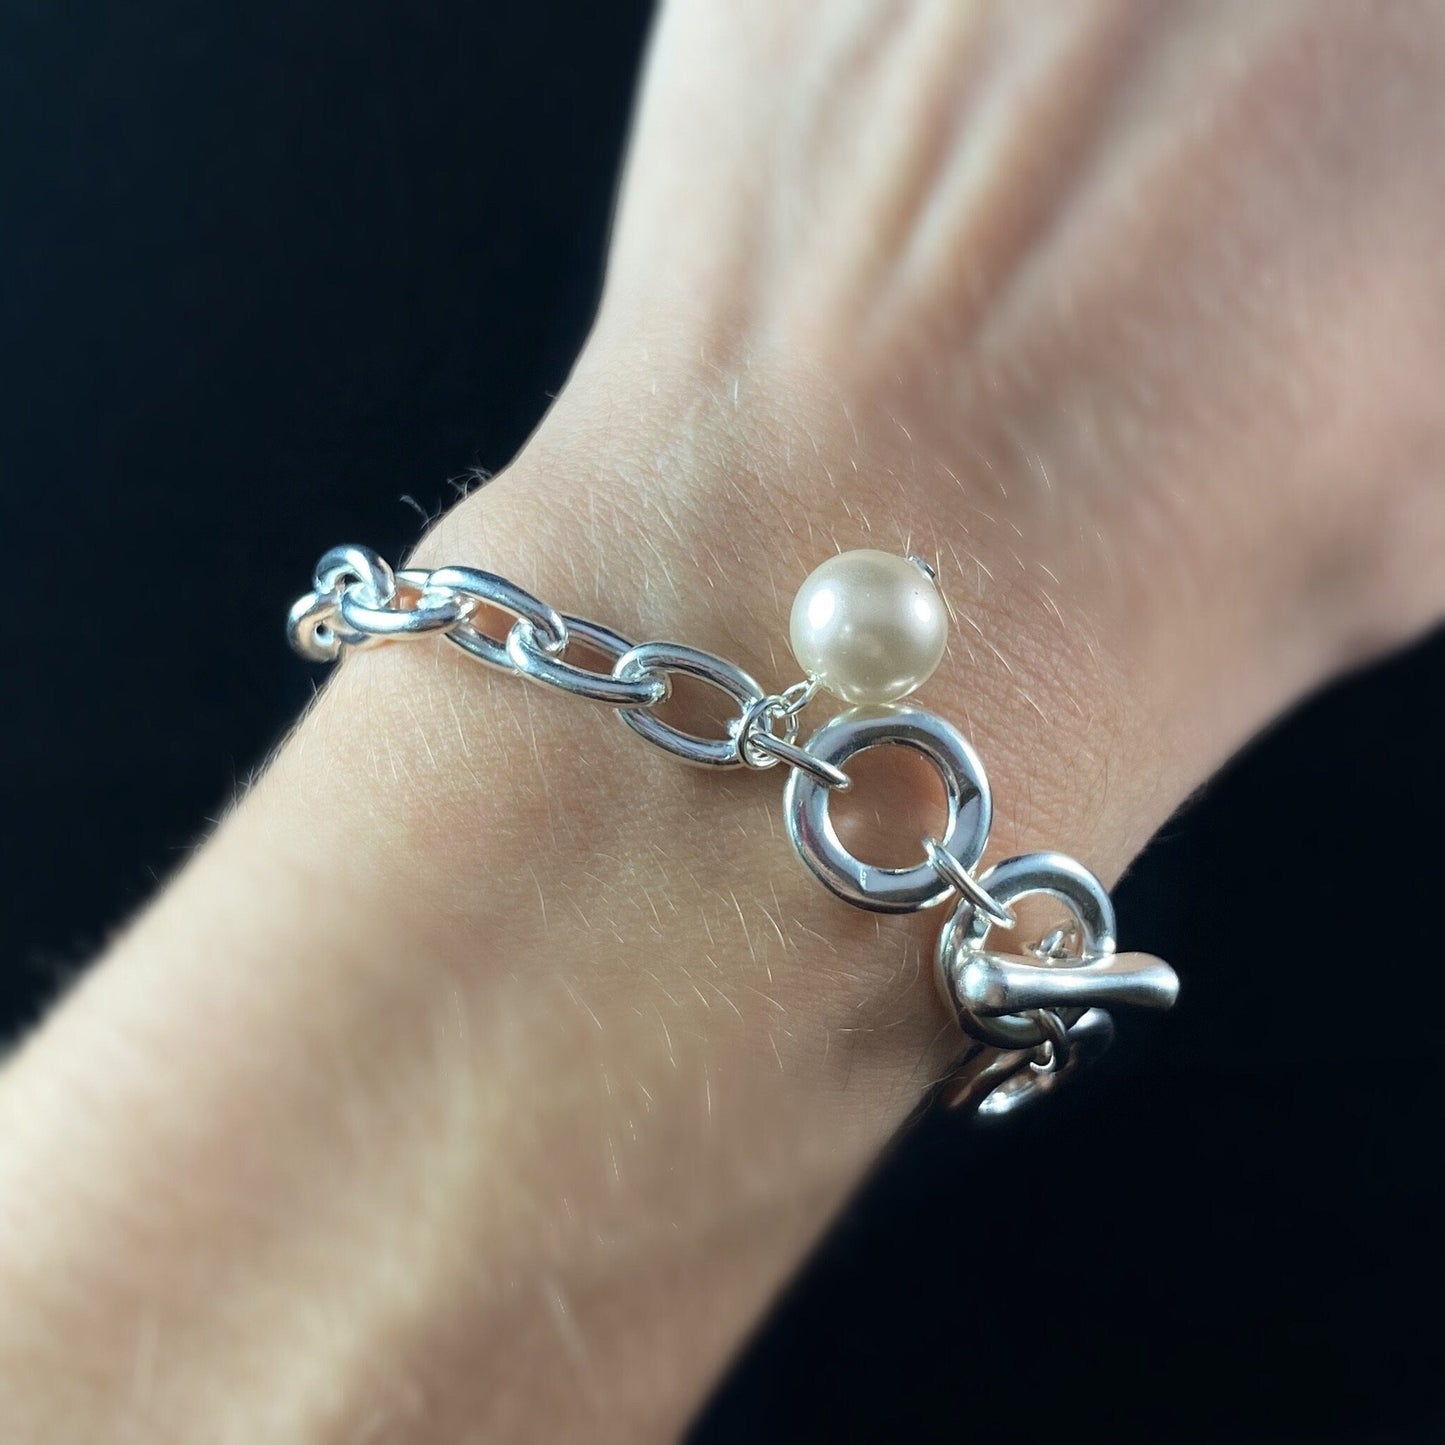 Silver Chain Bracelet with Dainty Pearl Charm - Handmade Nickel Free Ulla Jewelry